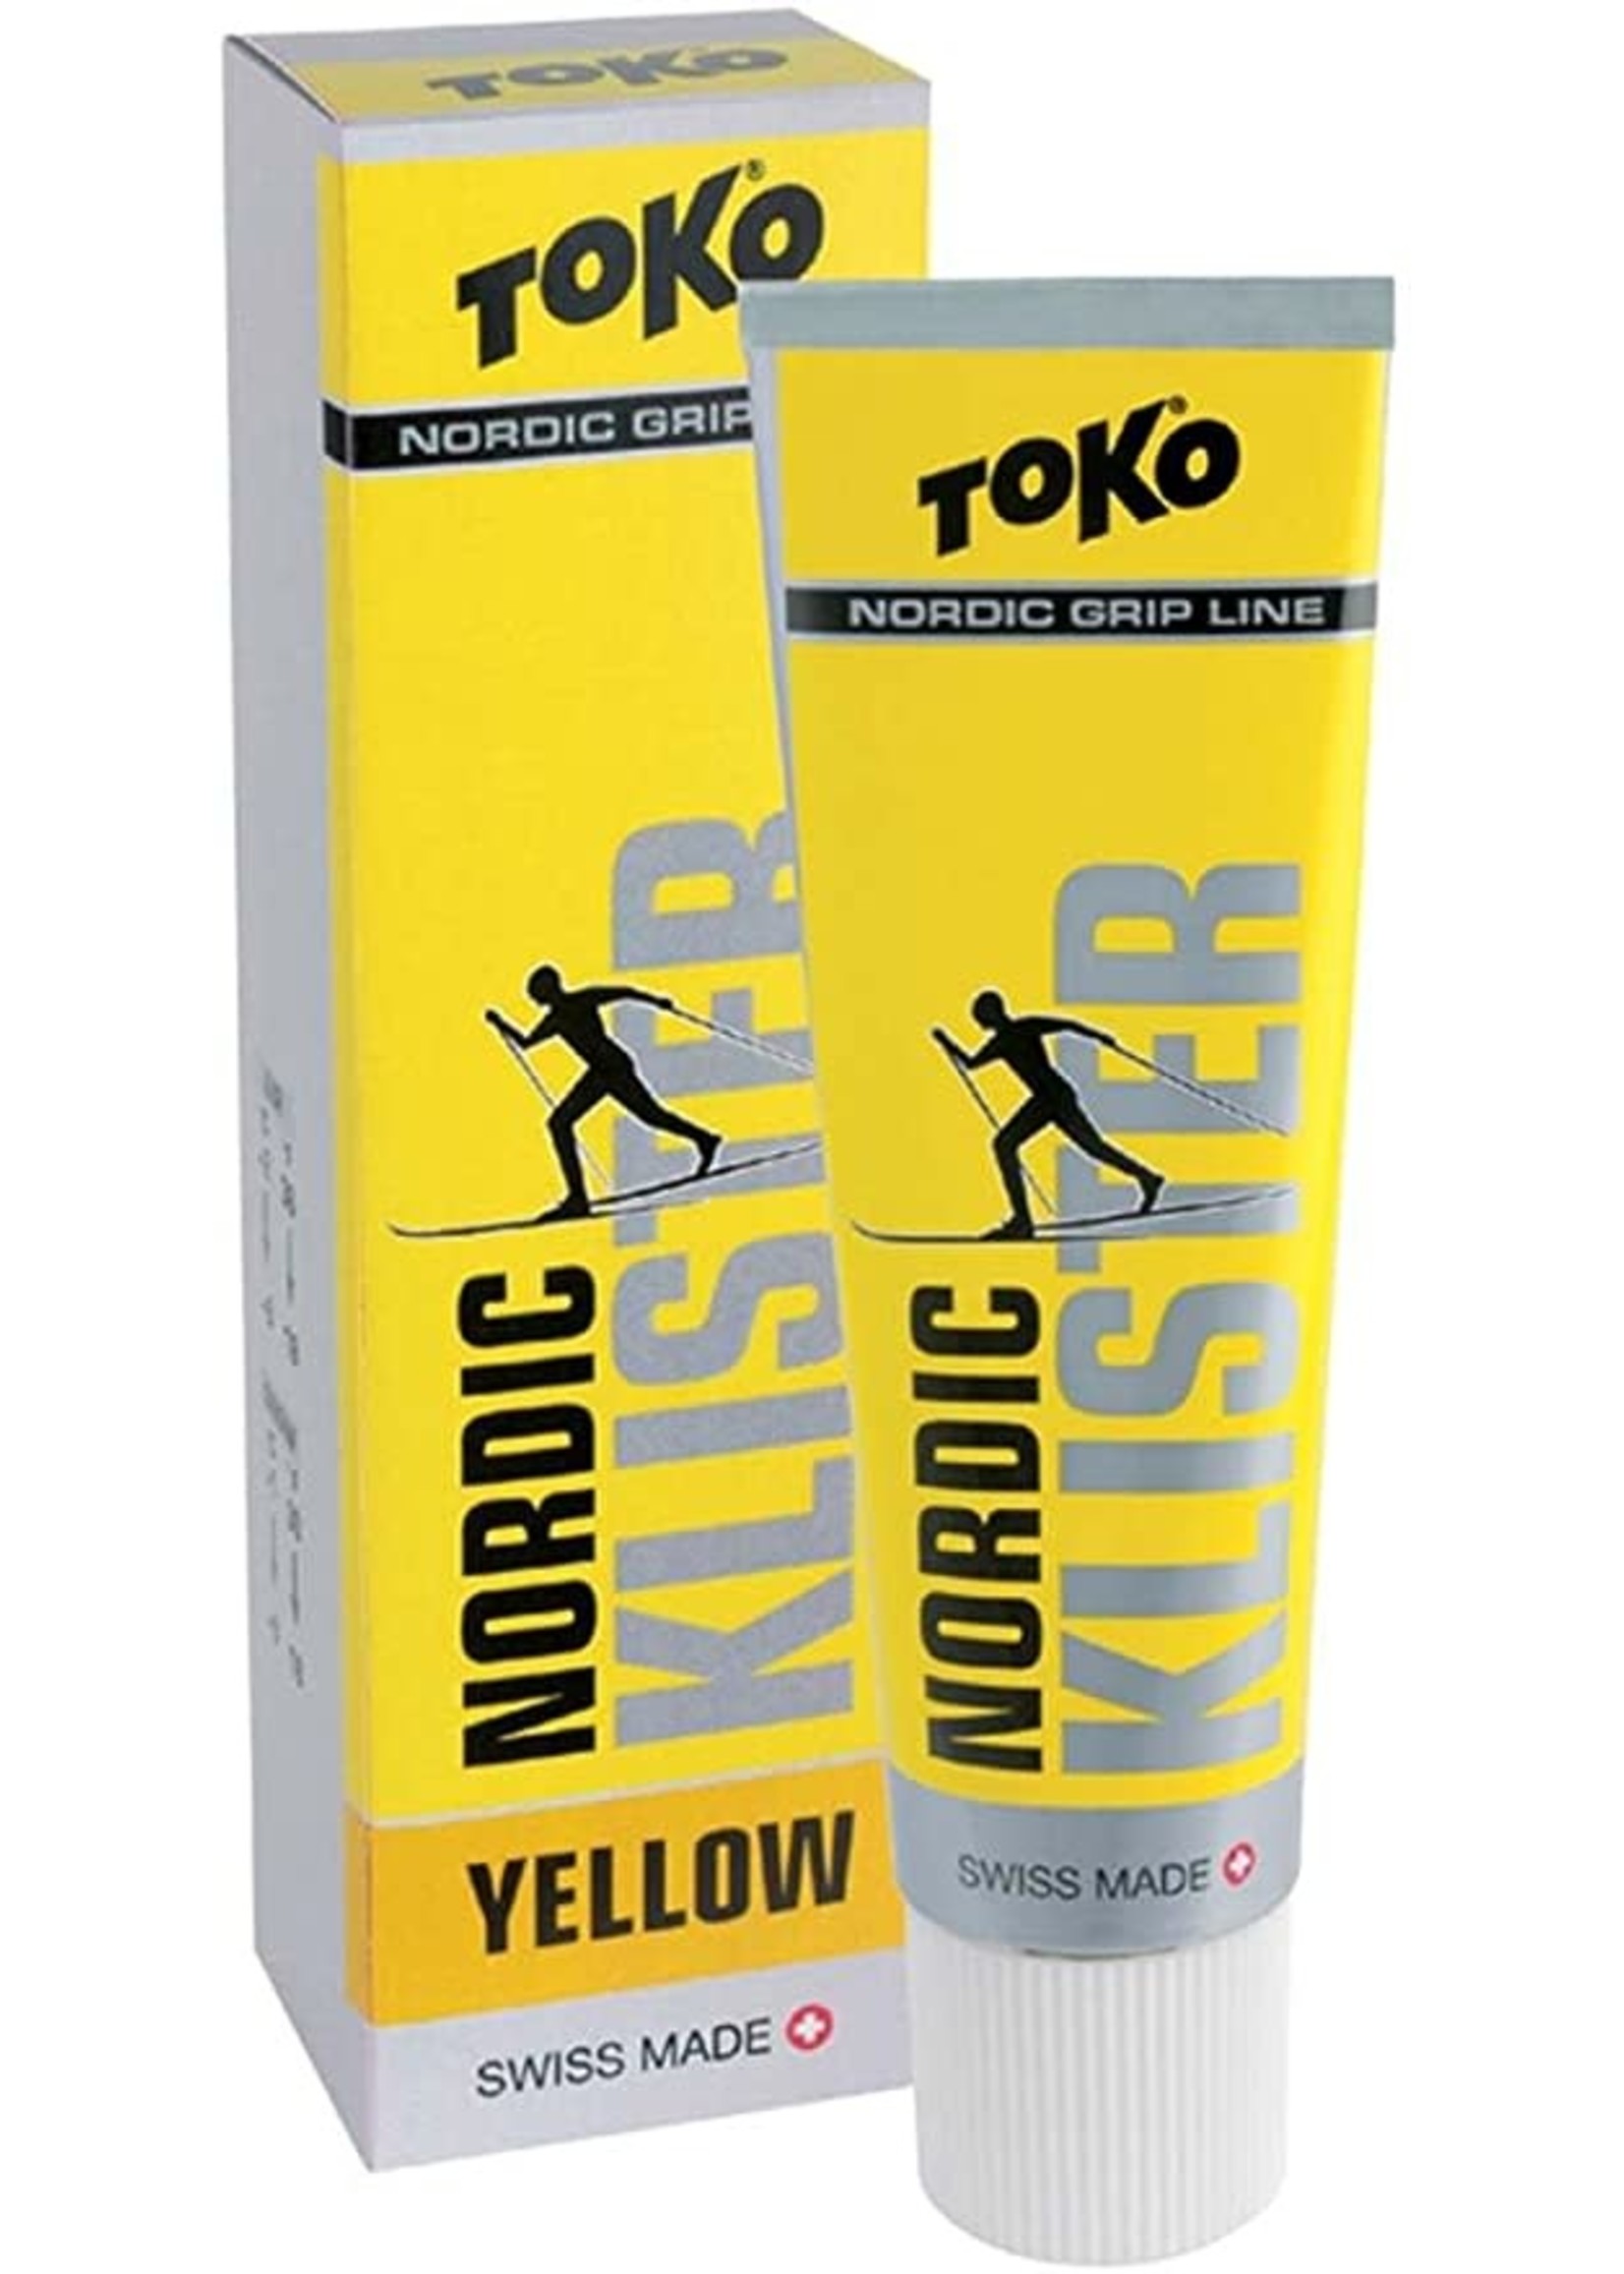 Toko Toko Nordic Klister Wax